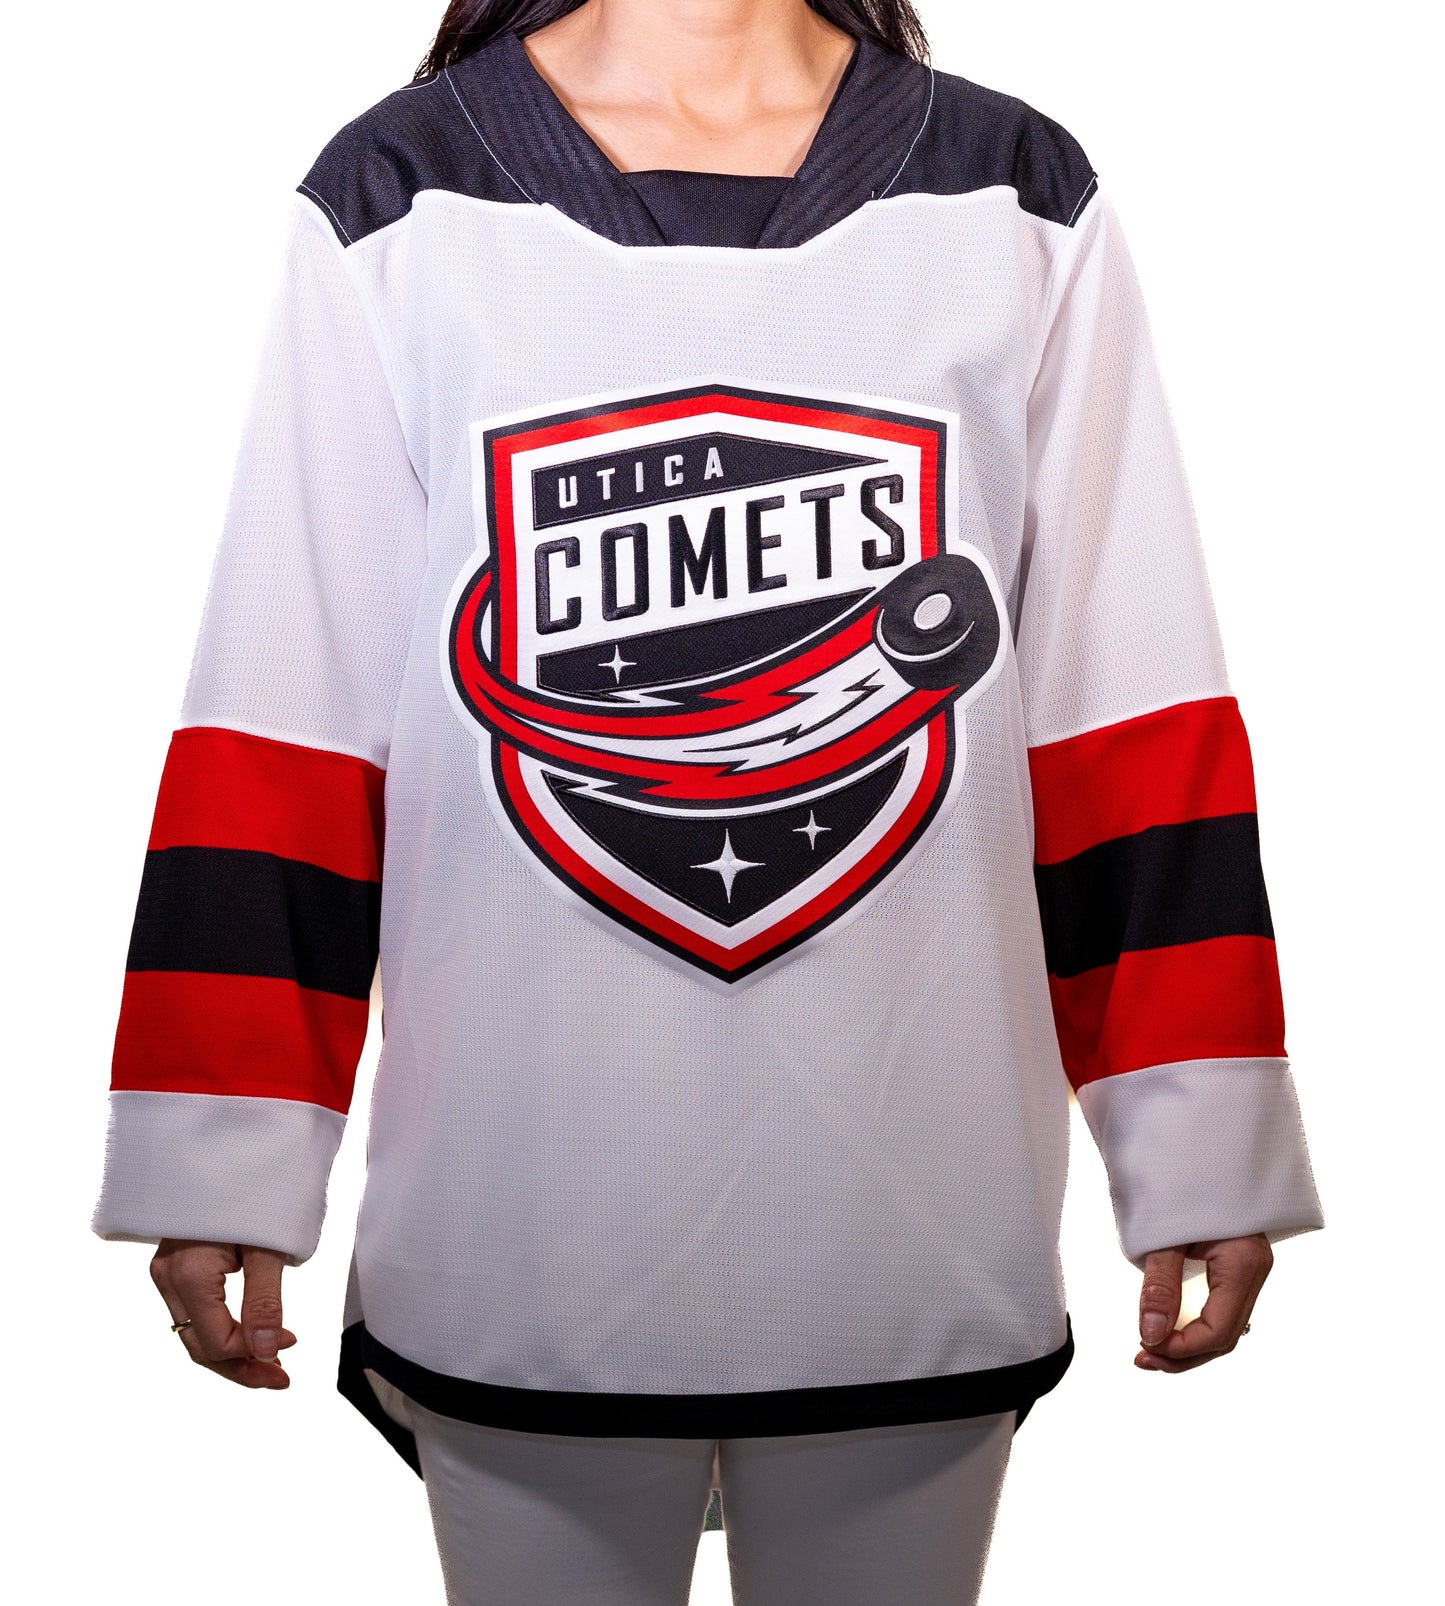 Utica Comets CCM Replica Jersey (Youth)